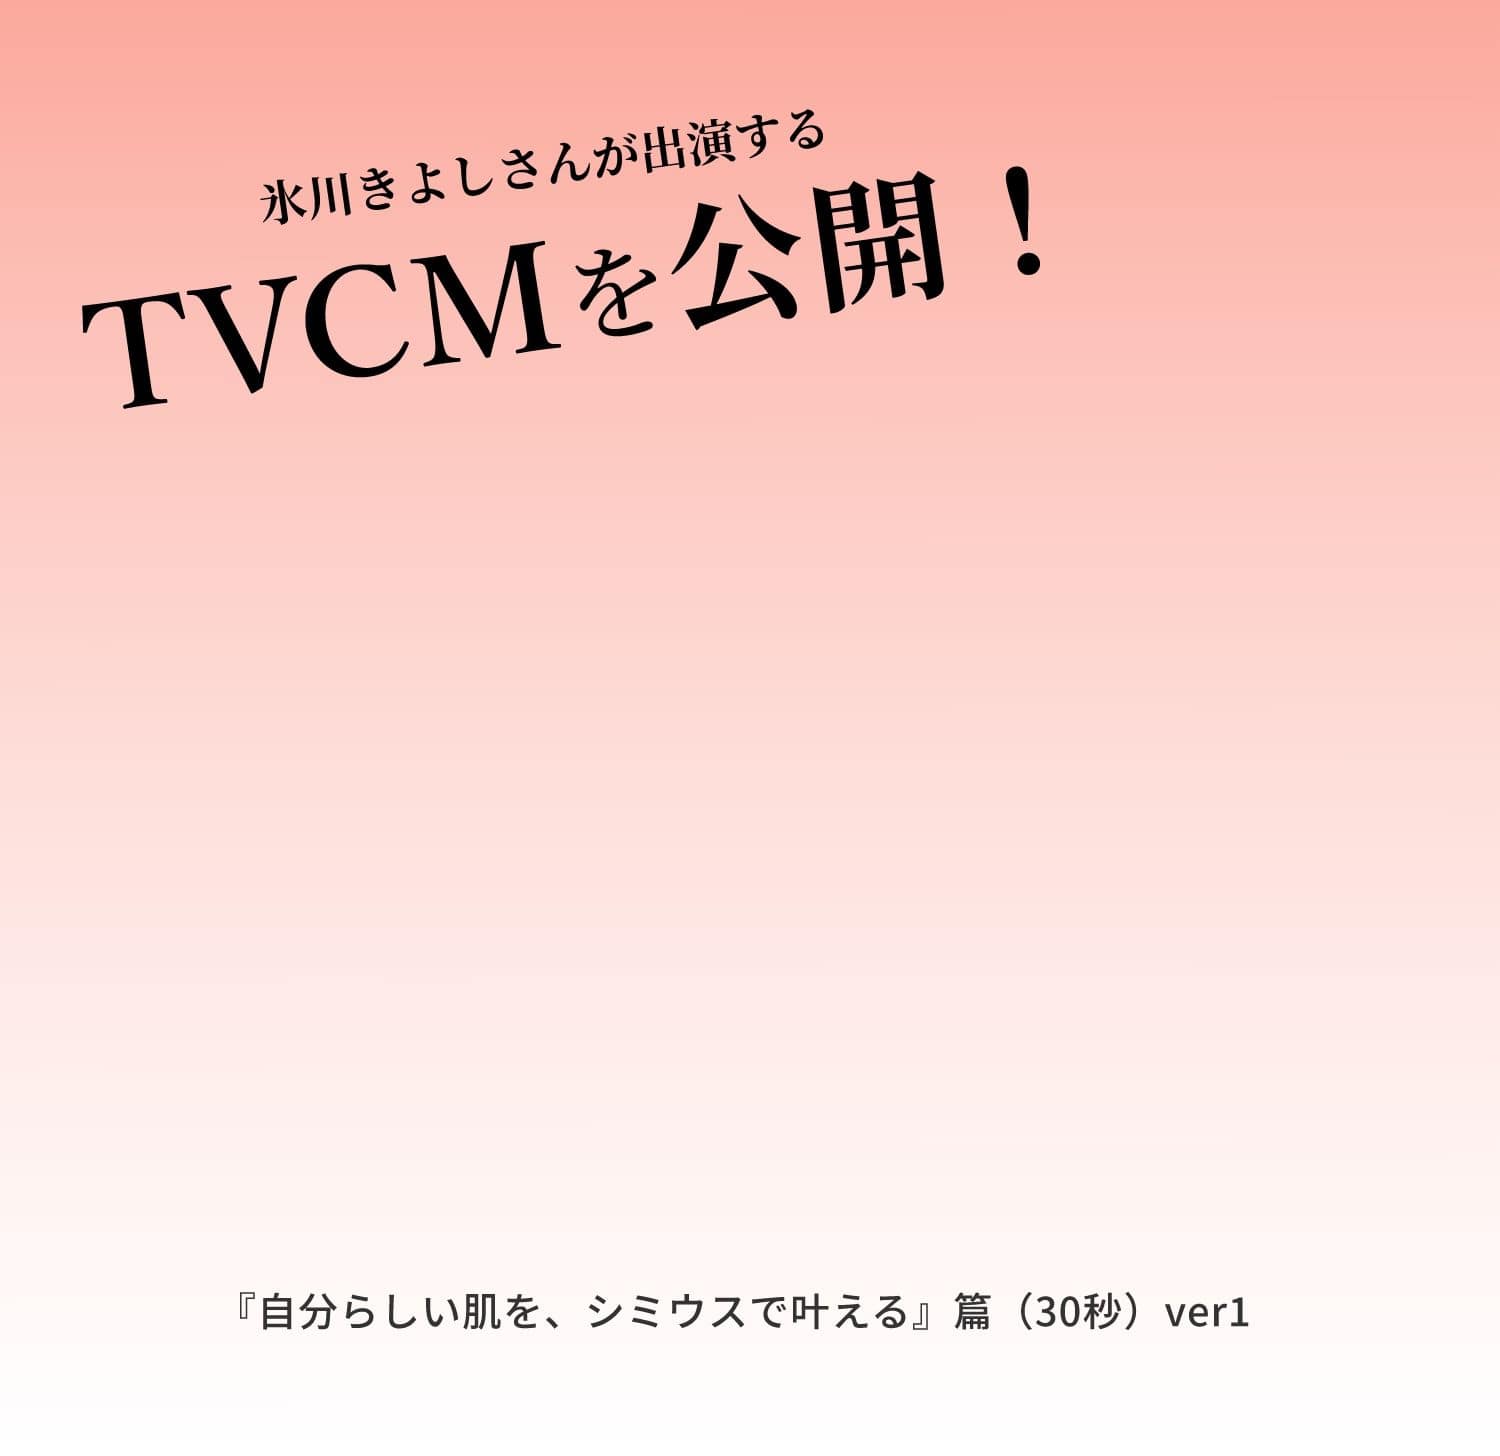 TVCMを公開